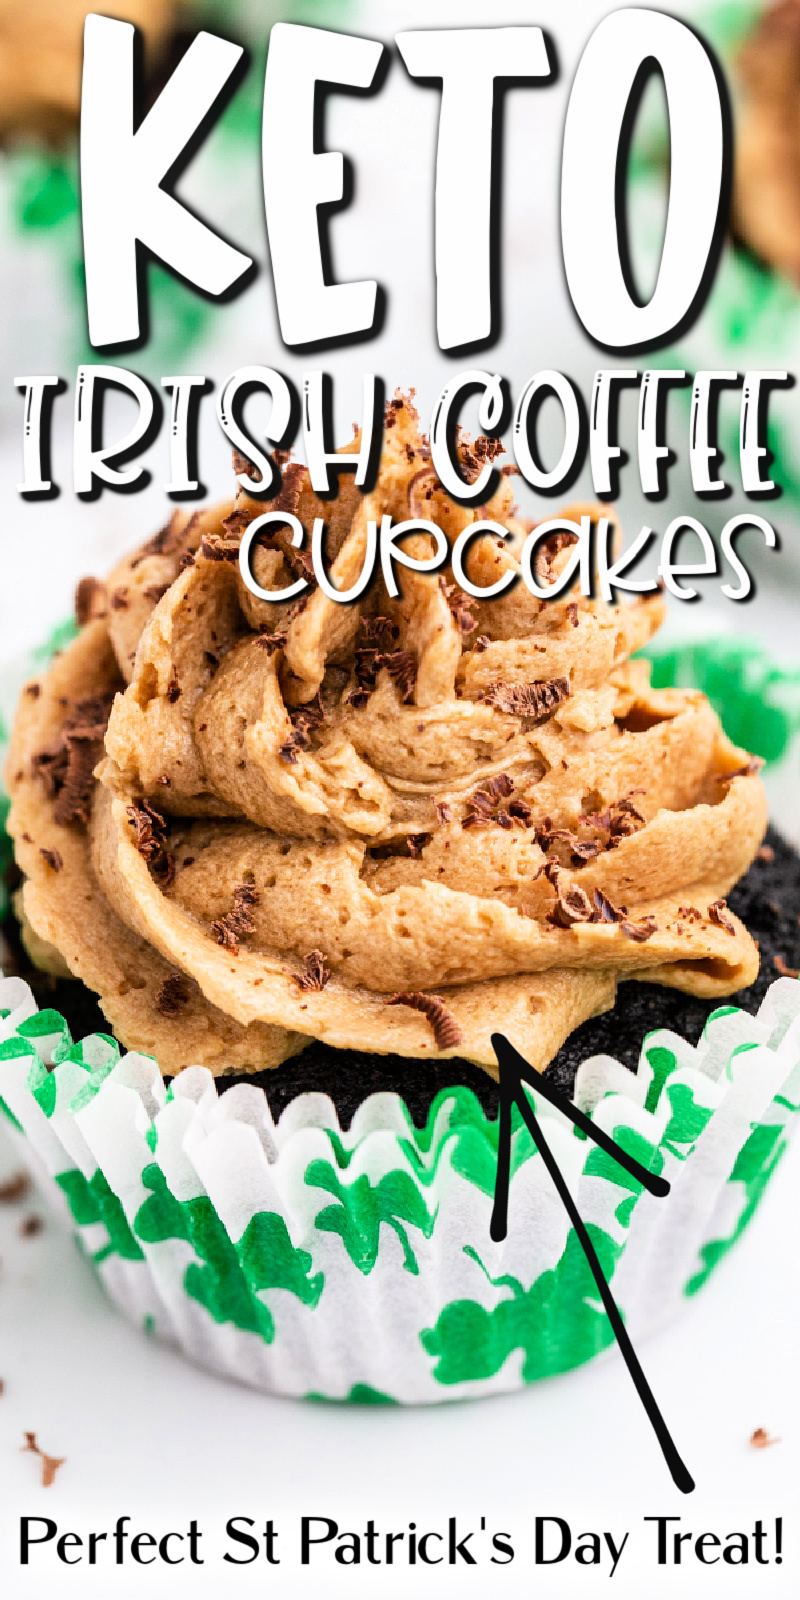 Keto Irish Coffee Cupcakes - These Keto Irish Coffee Cupcakes are the perfect low-carb and gluten-free chocolate treat to celebrate St Patrick's Day with. #lowcarb #keto #glutenfree #irish #coffee #chocolate #cupcakes #stpatricksday #dessert #sweets #recipe